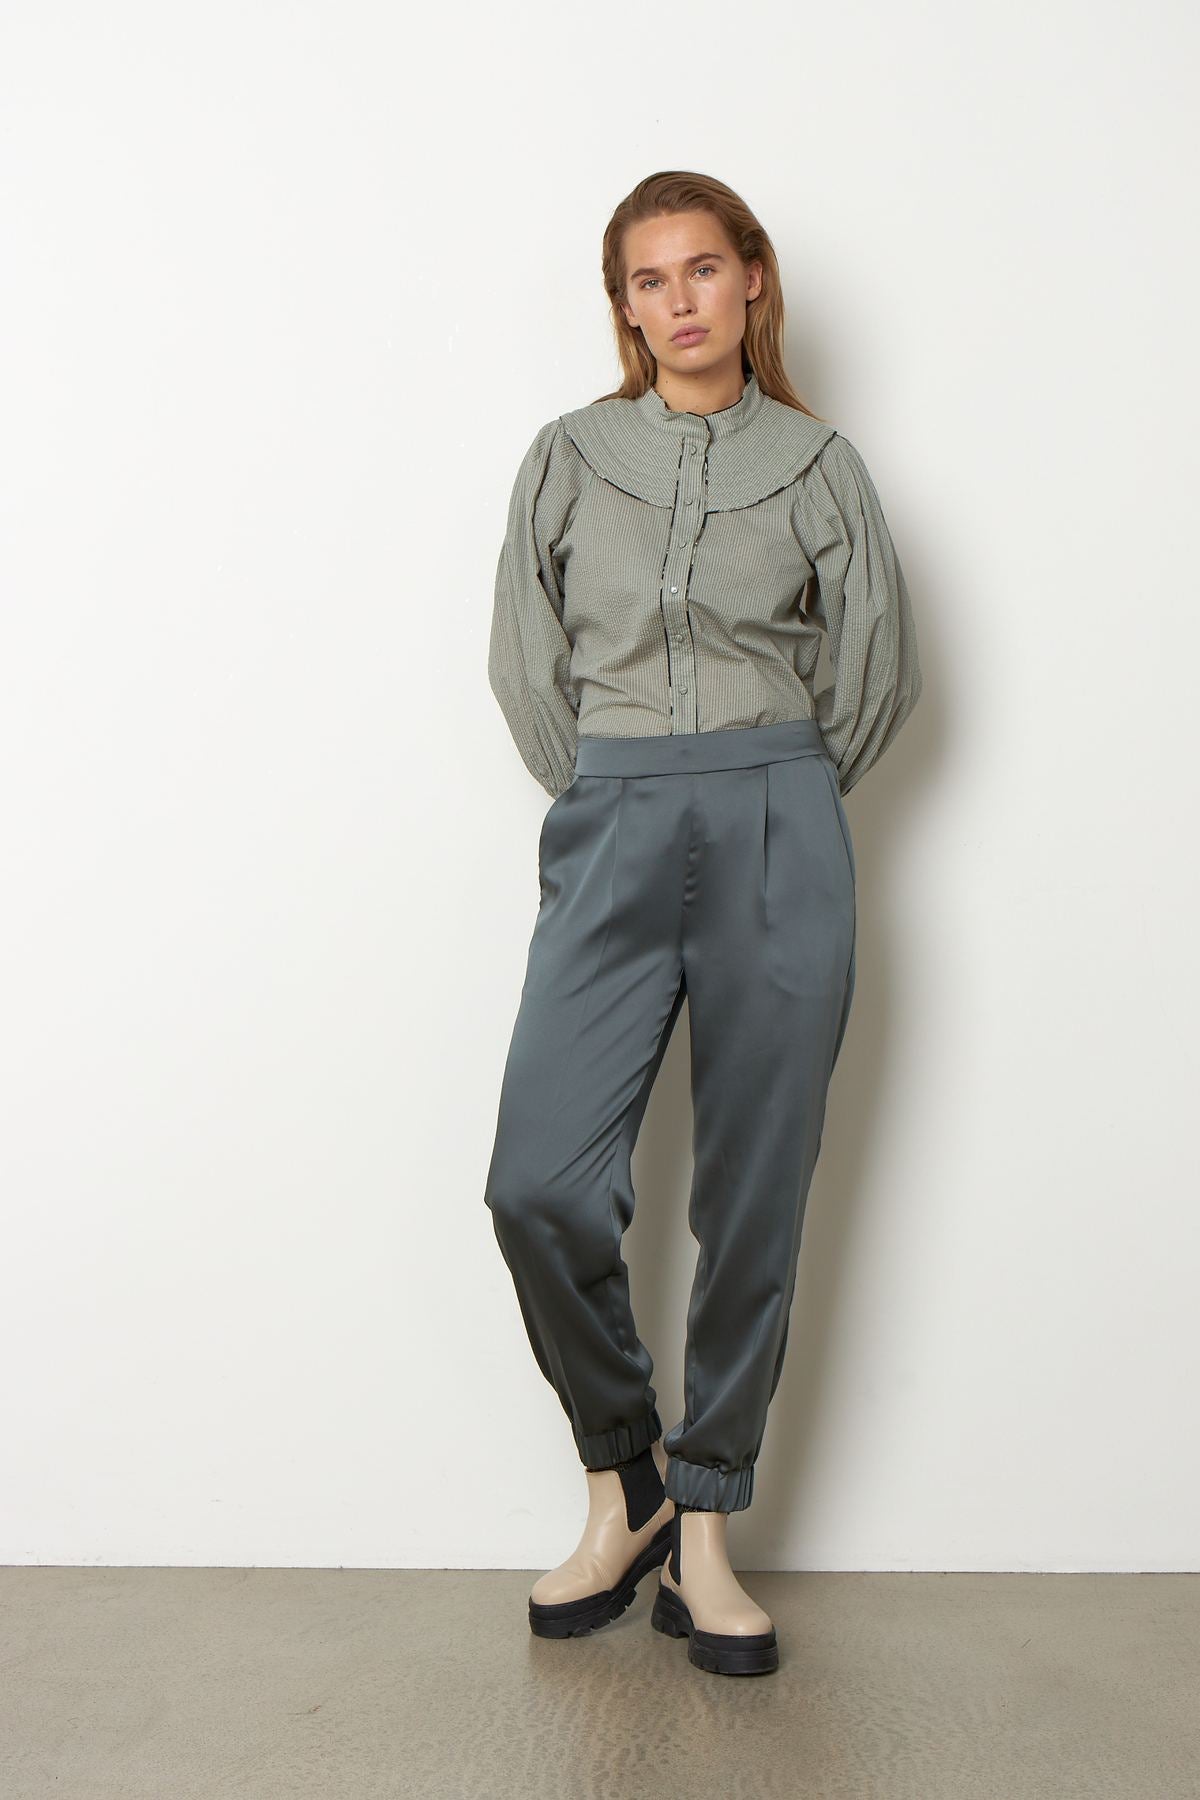 Merino Wool Set with Pants - Iris Top and Eva Pants